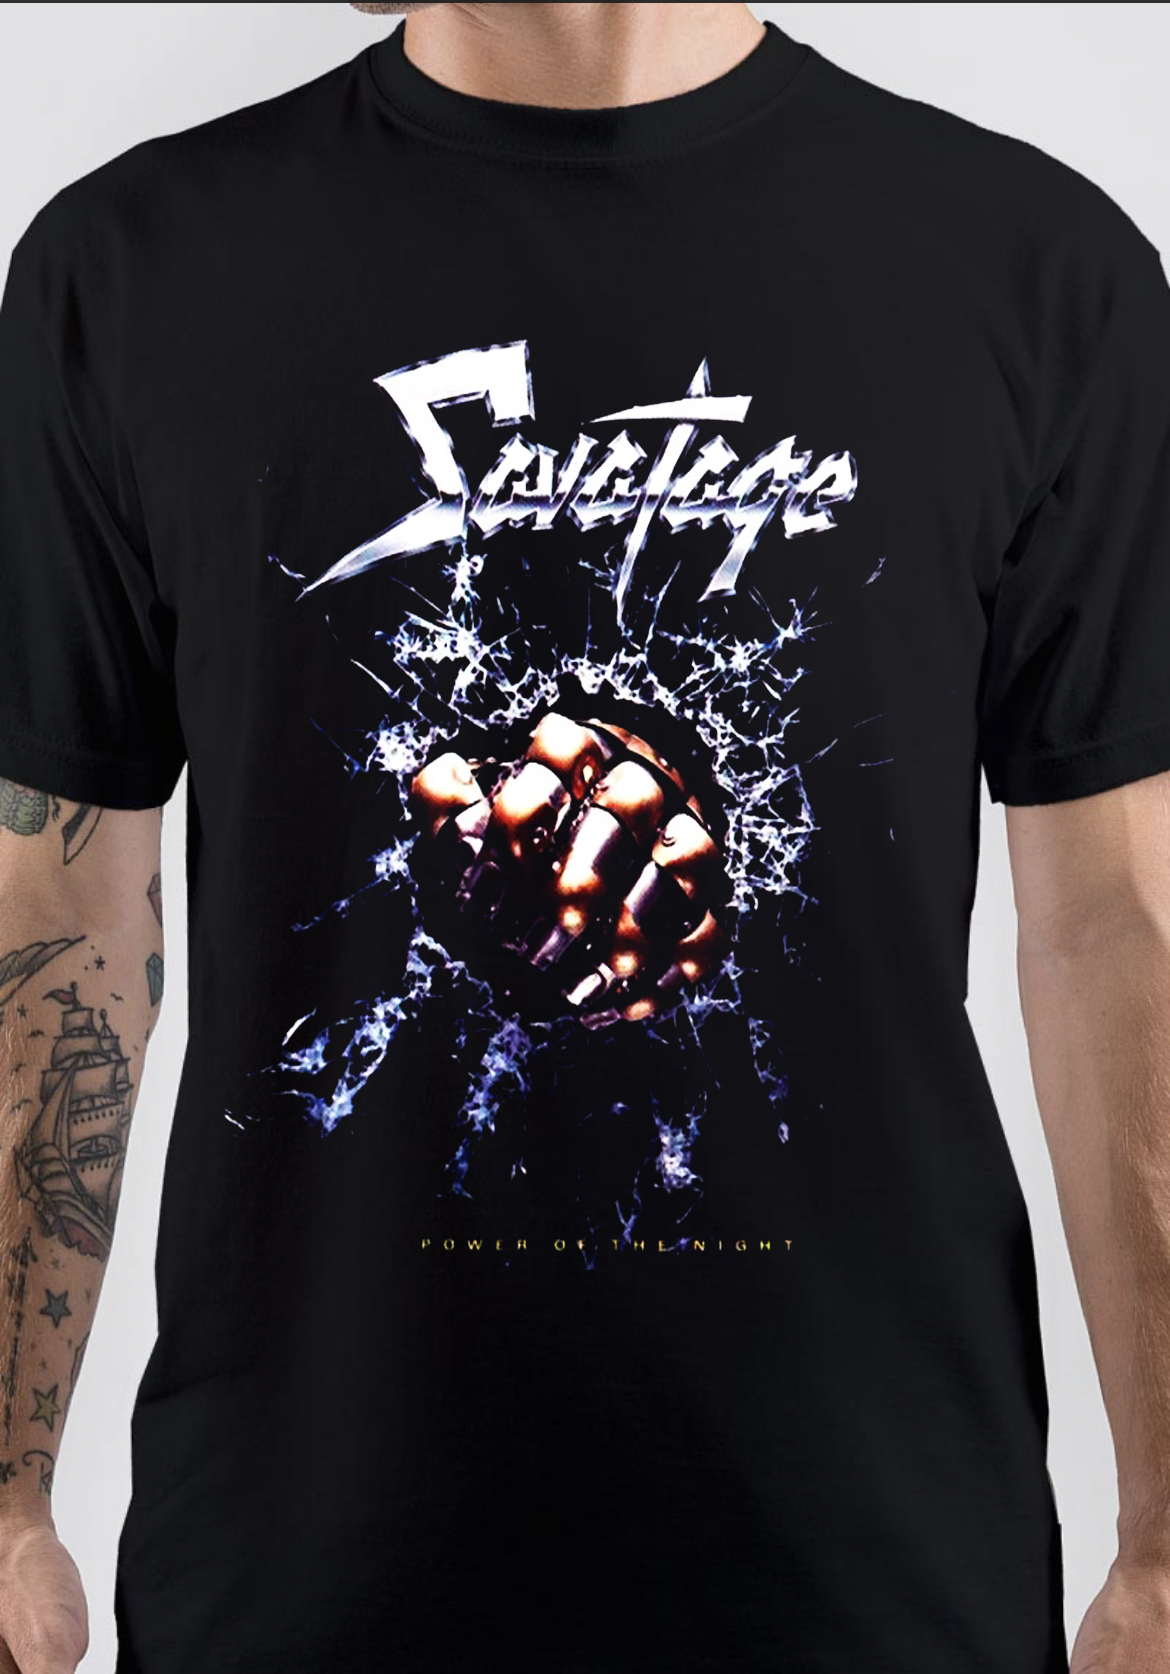 Savatage T-Shirt And Merchandise